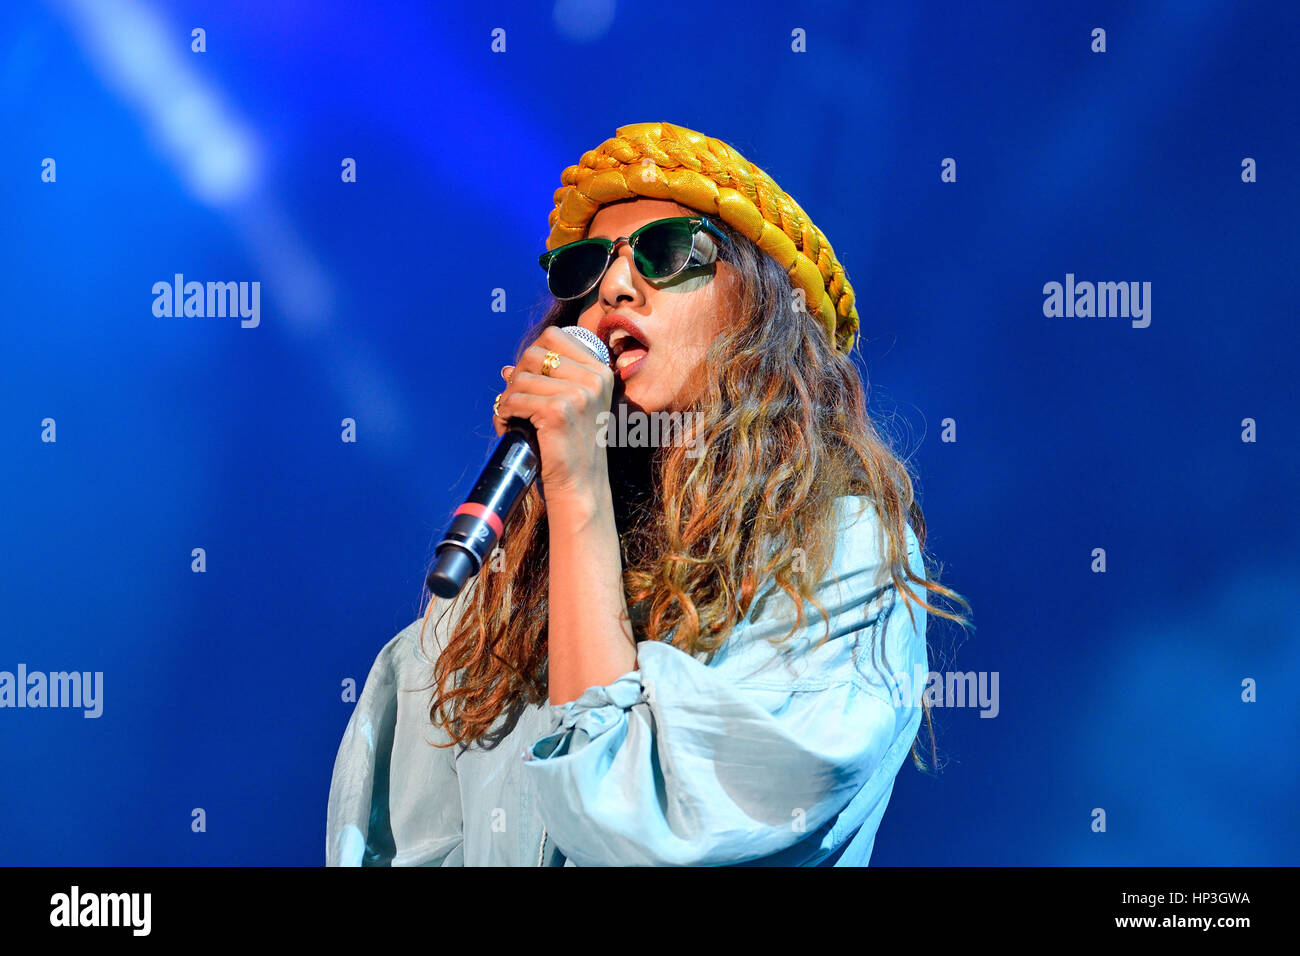 BENICASSIM, Spanien - 20 Juli: M.i.a., ein Rapper namens Mathangi Maya Arulpragasam, führt auf FIB Festival am 20. Juli 2014 in Benicassim, Spanien. Stockfoto